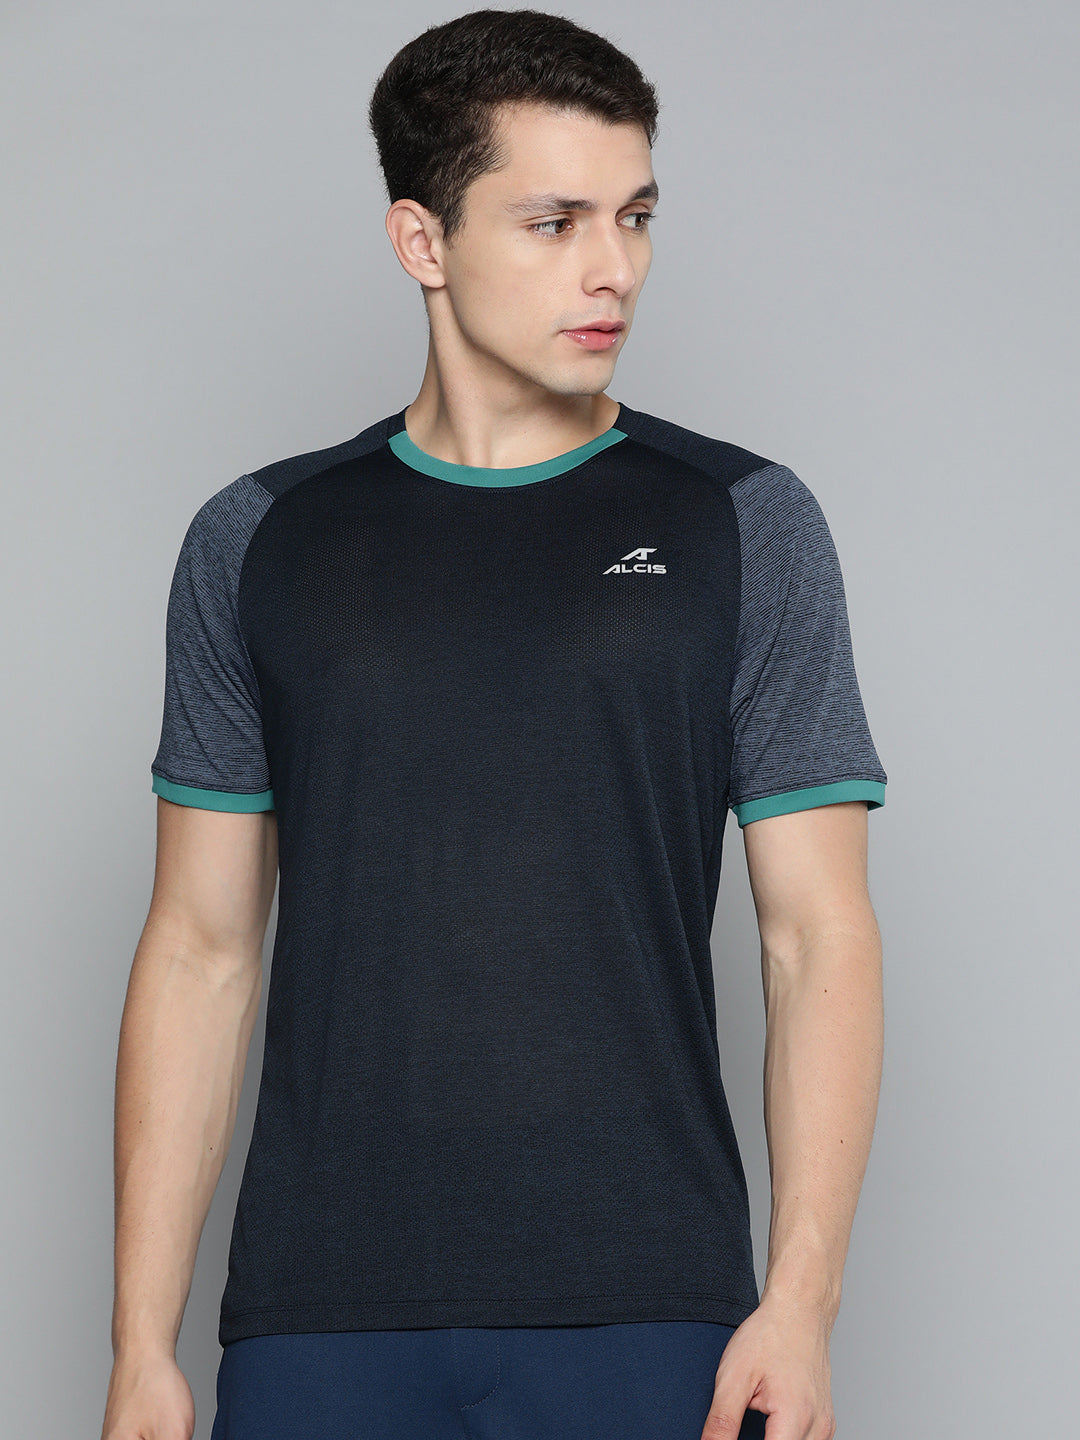 Alcis Men Colourblocked Dry Tech Slim Fit T-shirt